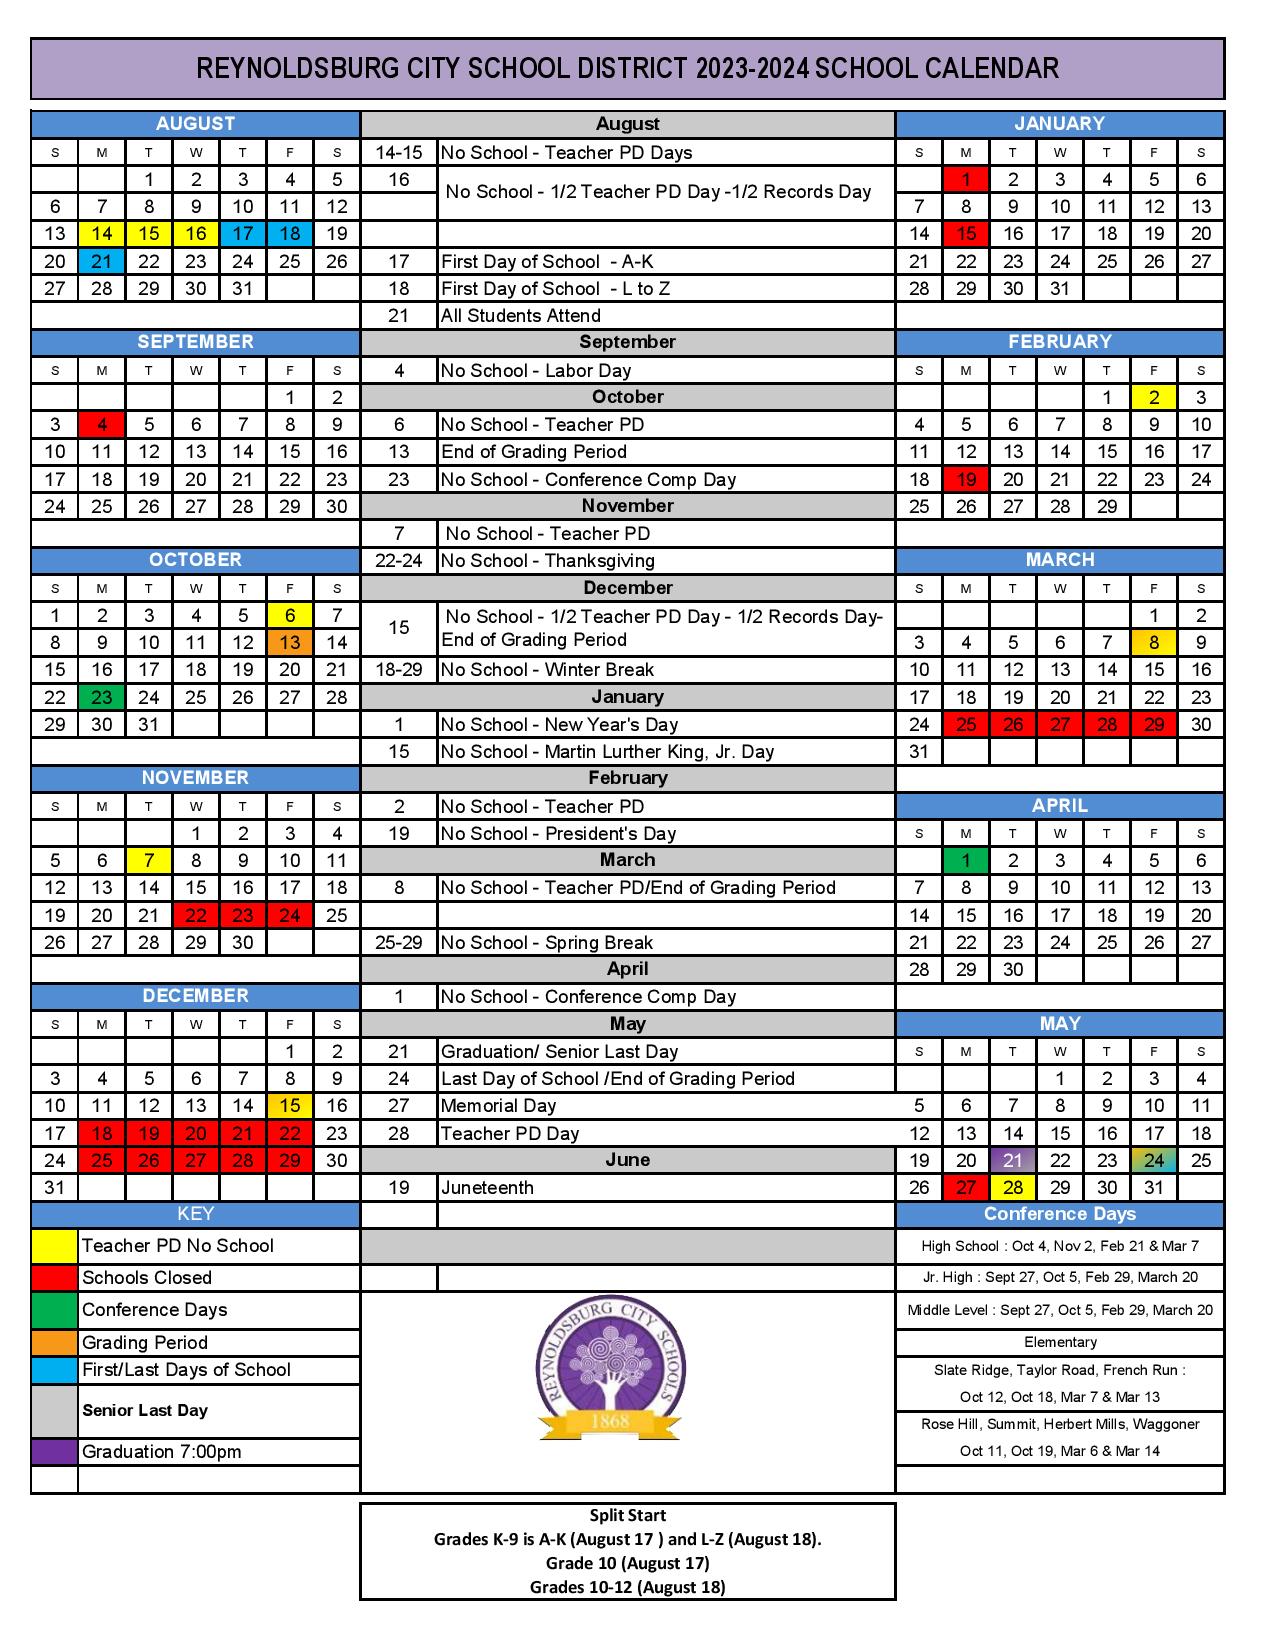 Reynoldsburg City Schools Calendar 20232024 in PDF